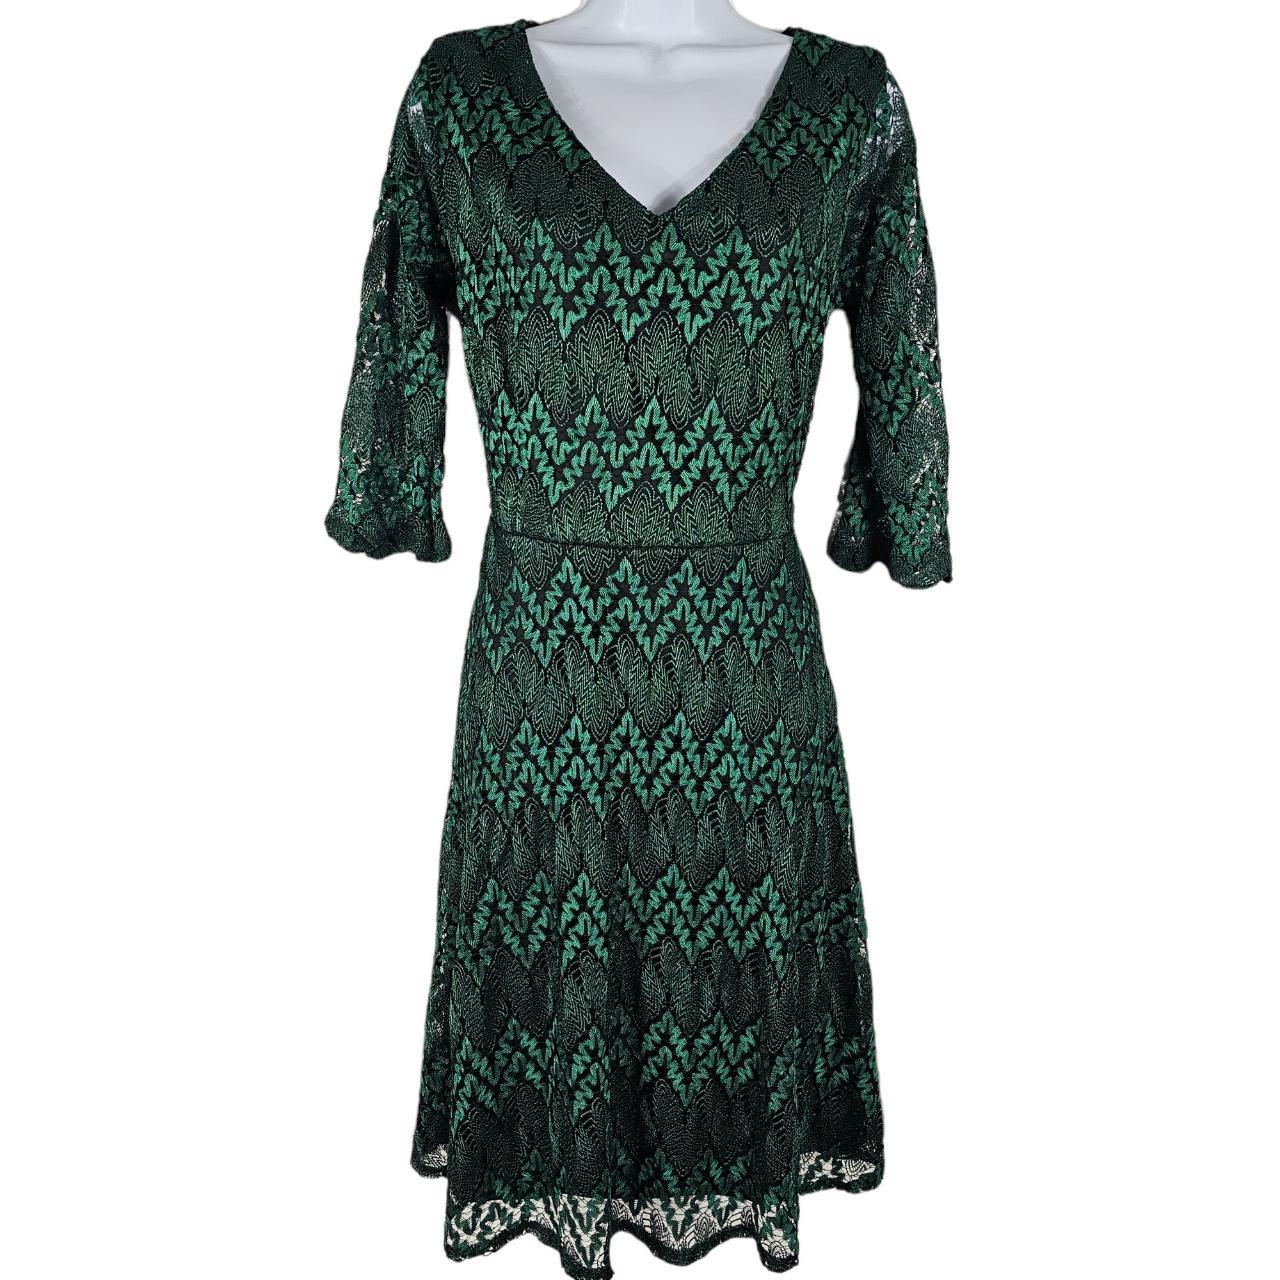 Emerald Green Lace Size Large A-Line Dress Stunning... - Depop